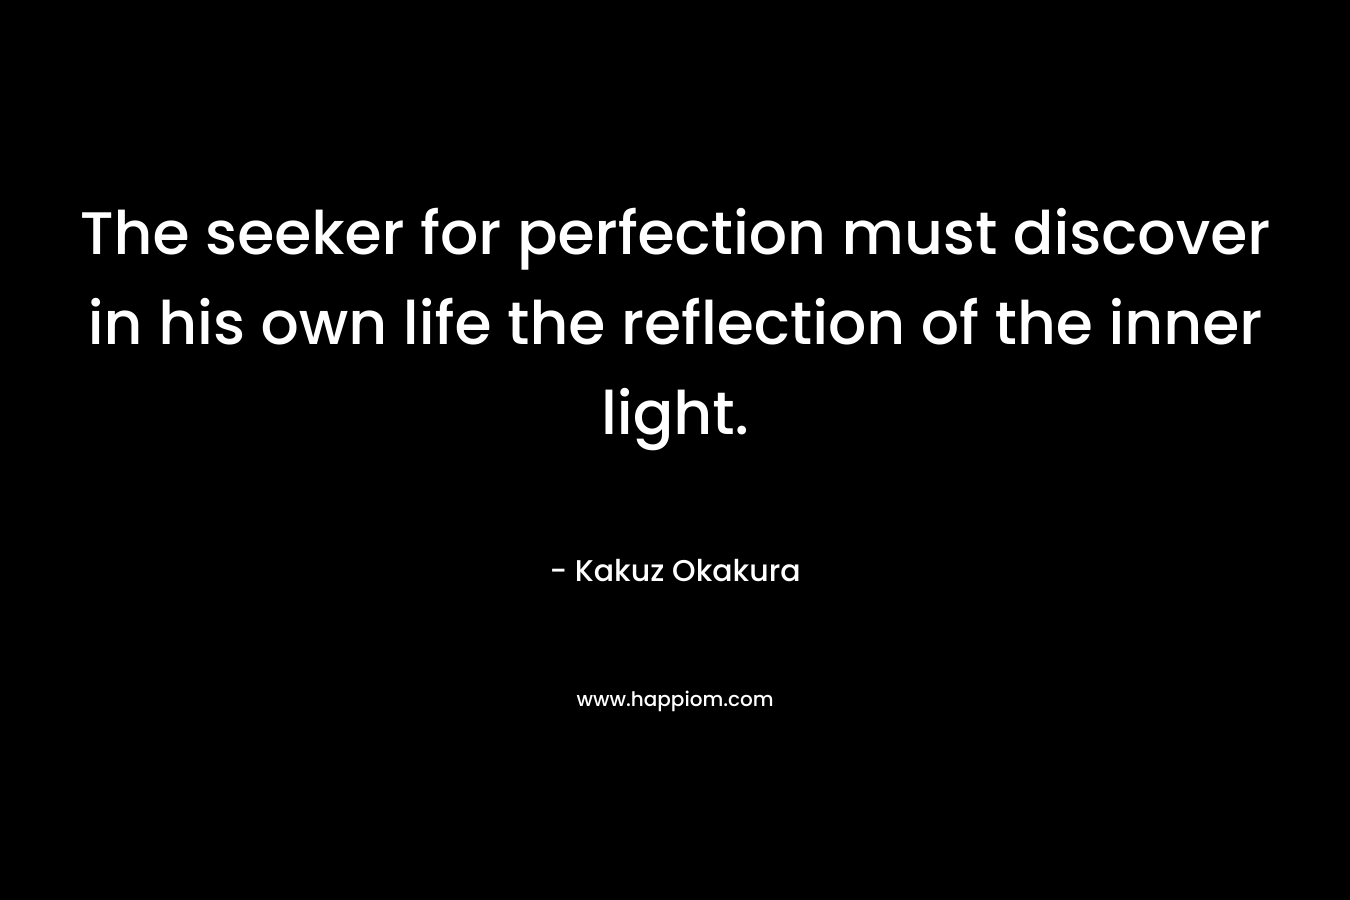 The seeker for perfection must discover in his own life the reflection of the inner light. – Kakuz Okakura